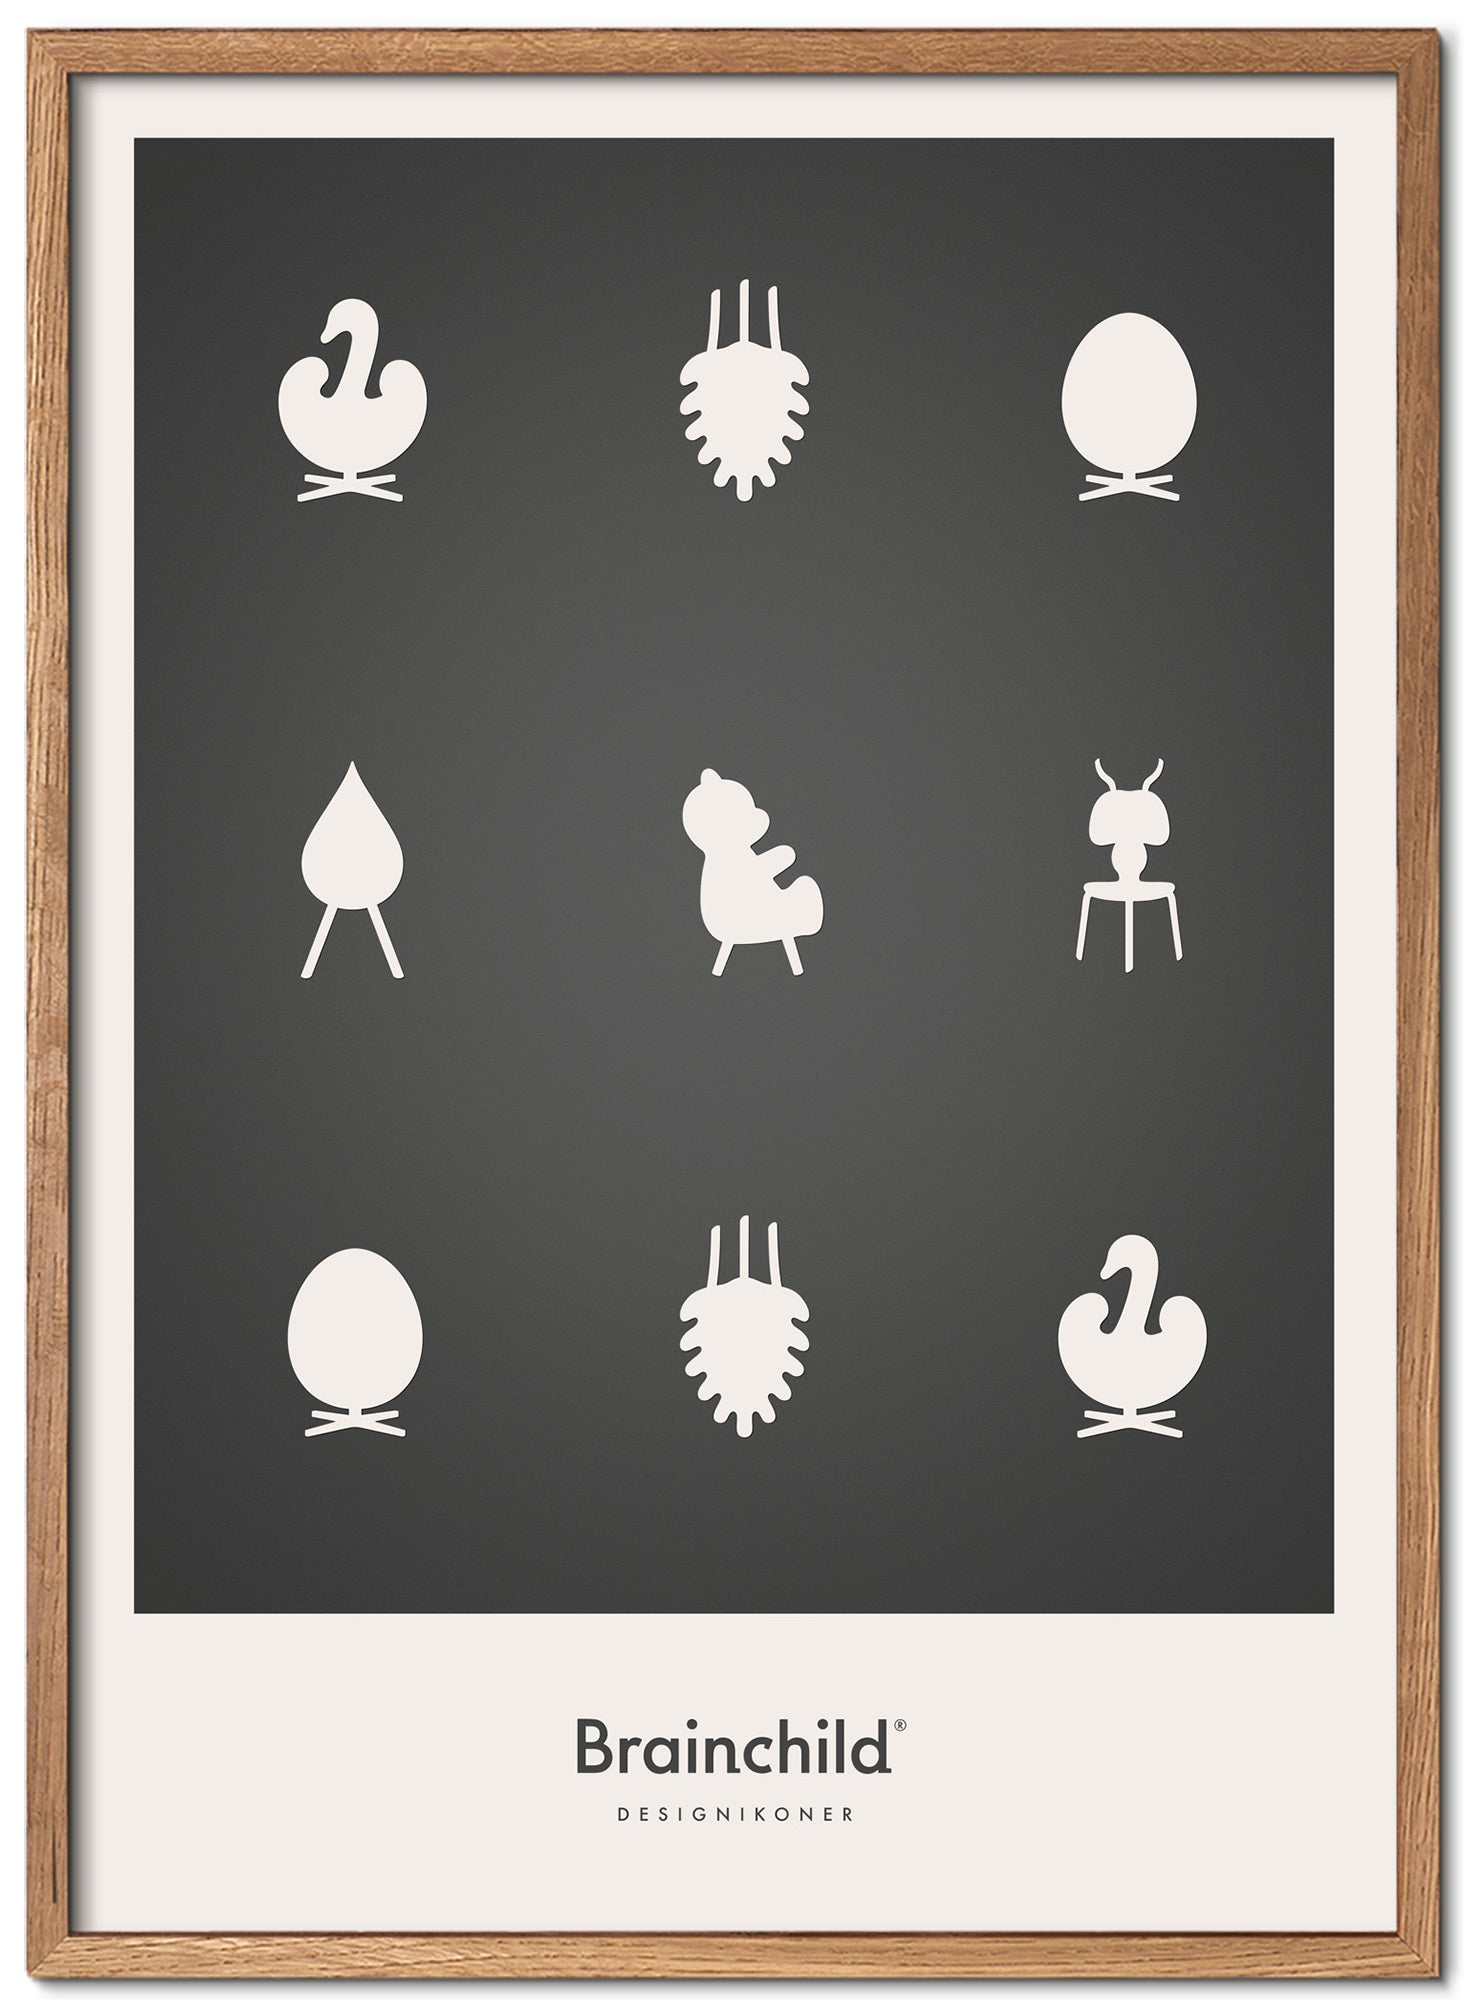 Brainchild Design Icons Poster Frame Made Of Light Wood A5, Dark Grey